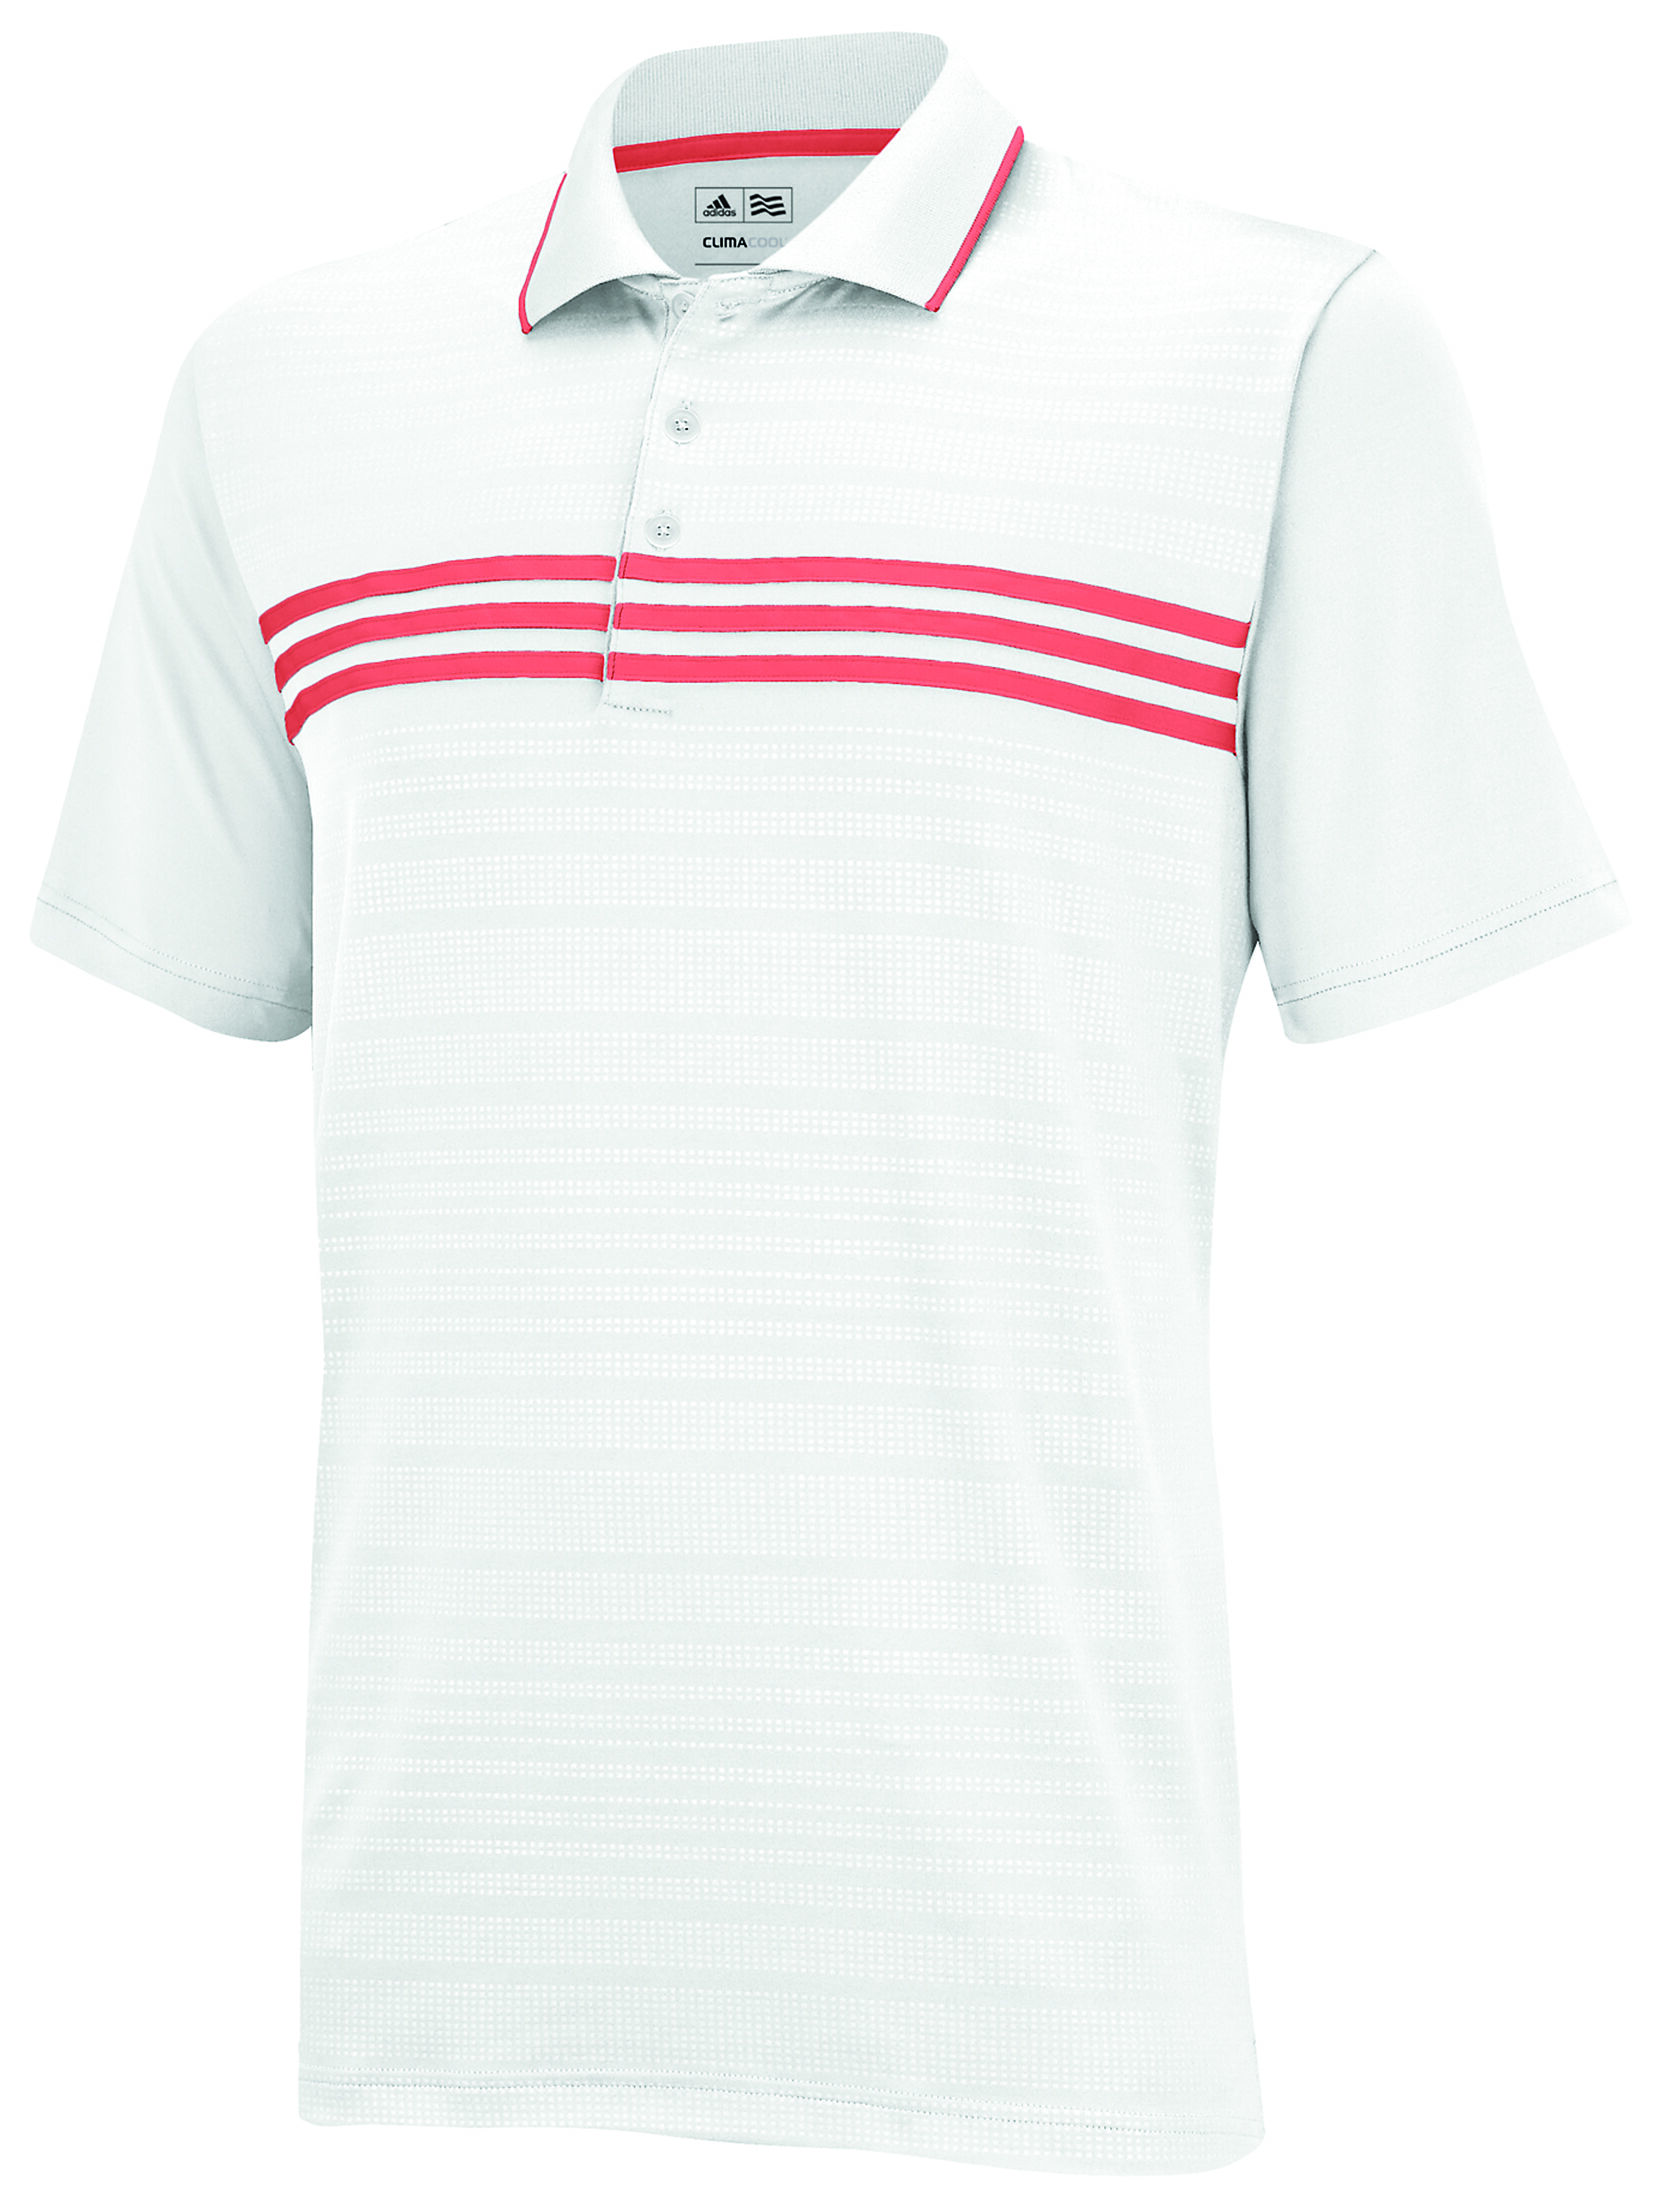 adidas golf men's puremotion climacool 3 stripes chest polo